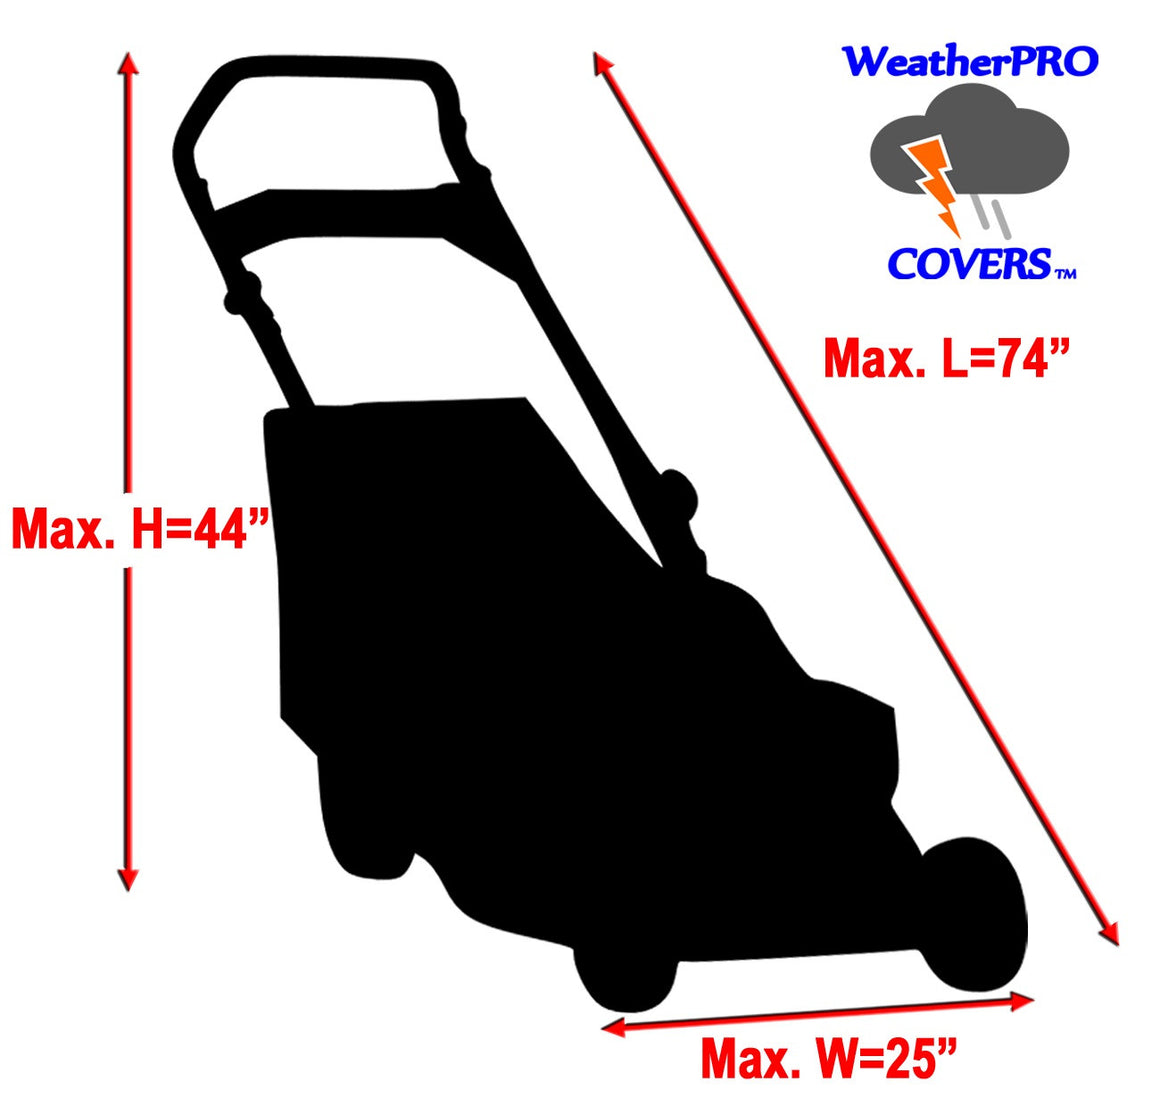 WeatherPRO Lawn Mower Cover - Black - WeatherPRO Cover,  Lawn Mower Cover - Lawn Mower Cover